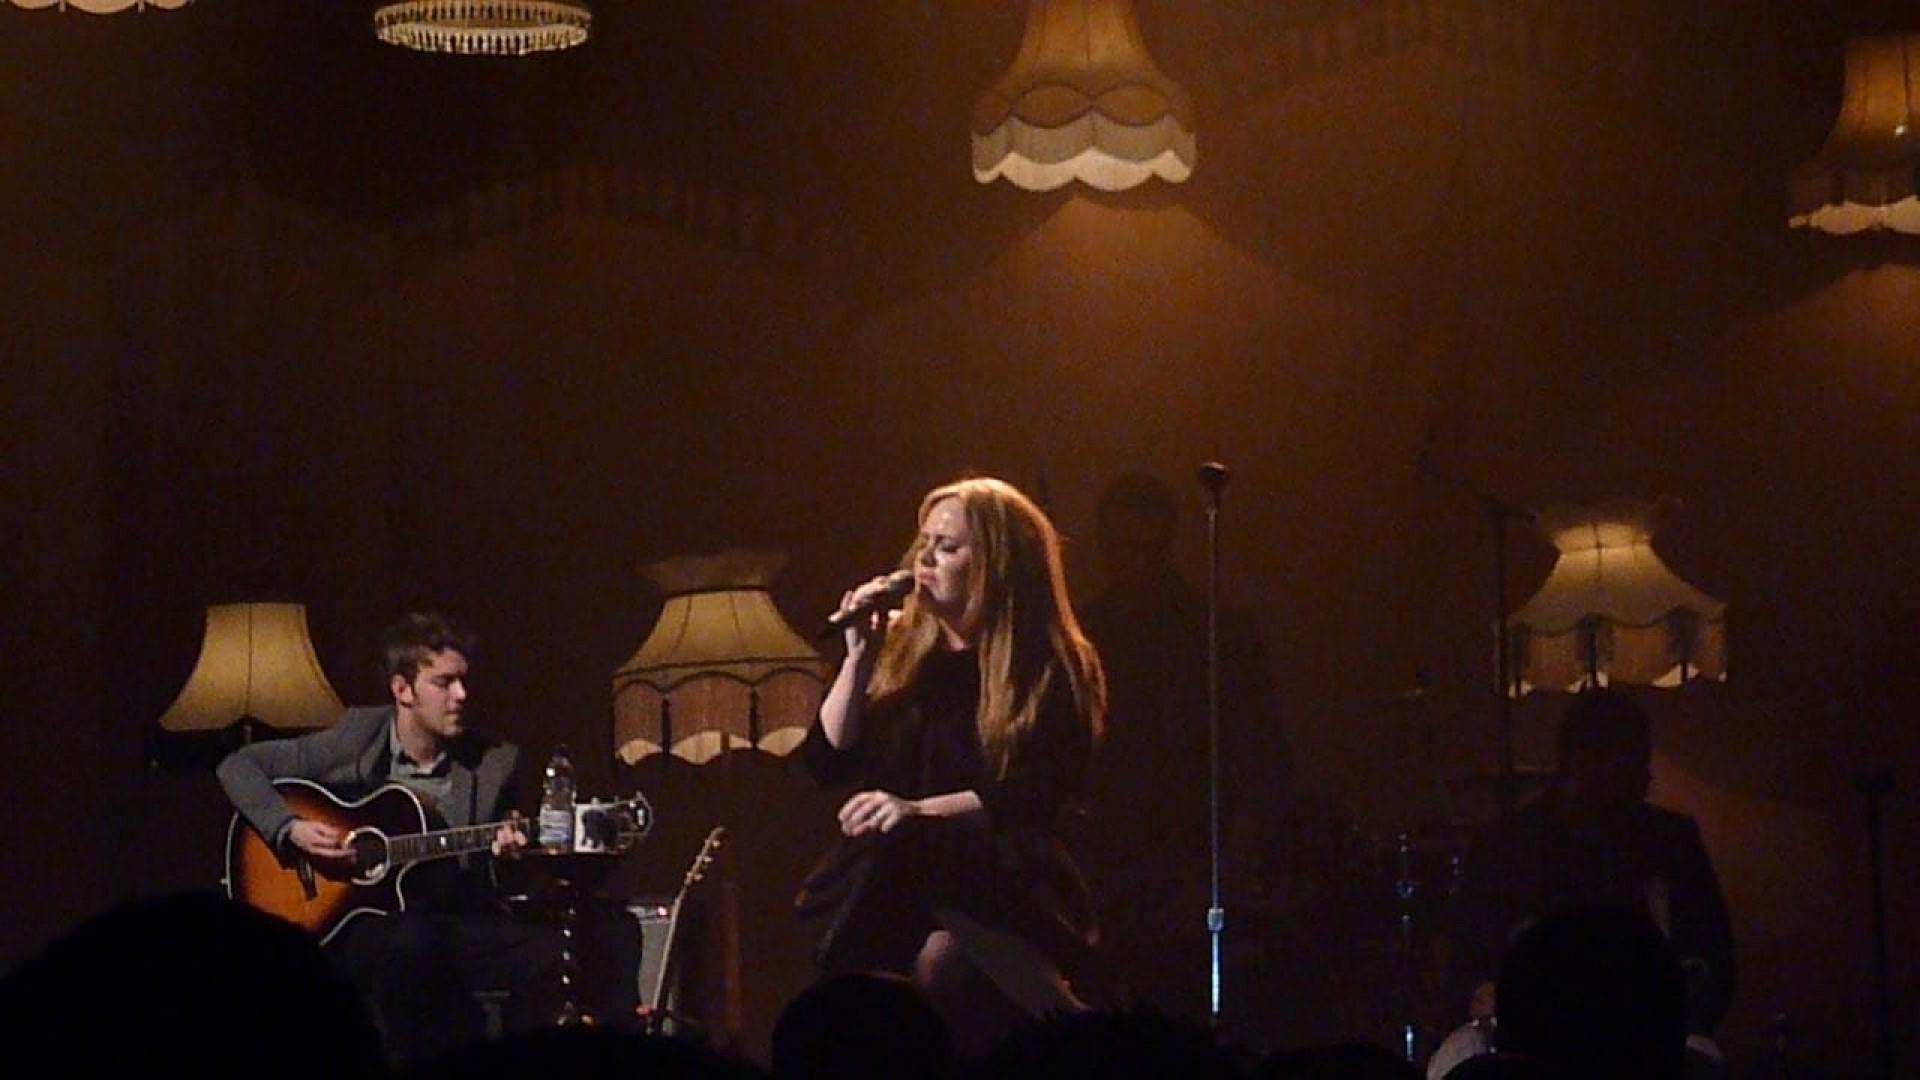 Adele: iTunes Festival: London